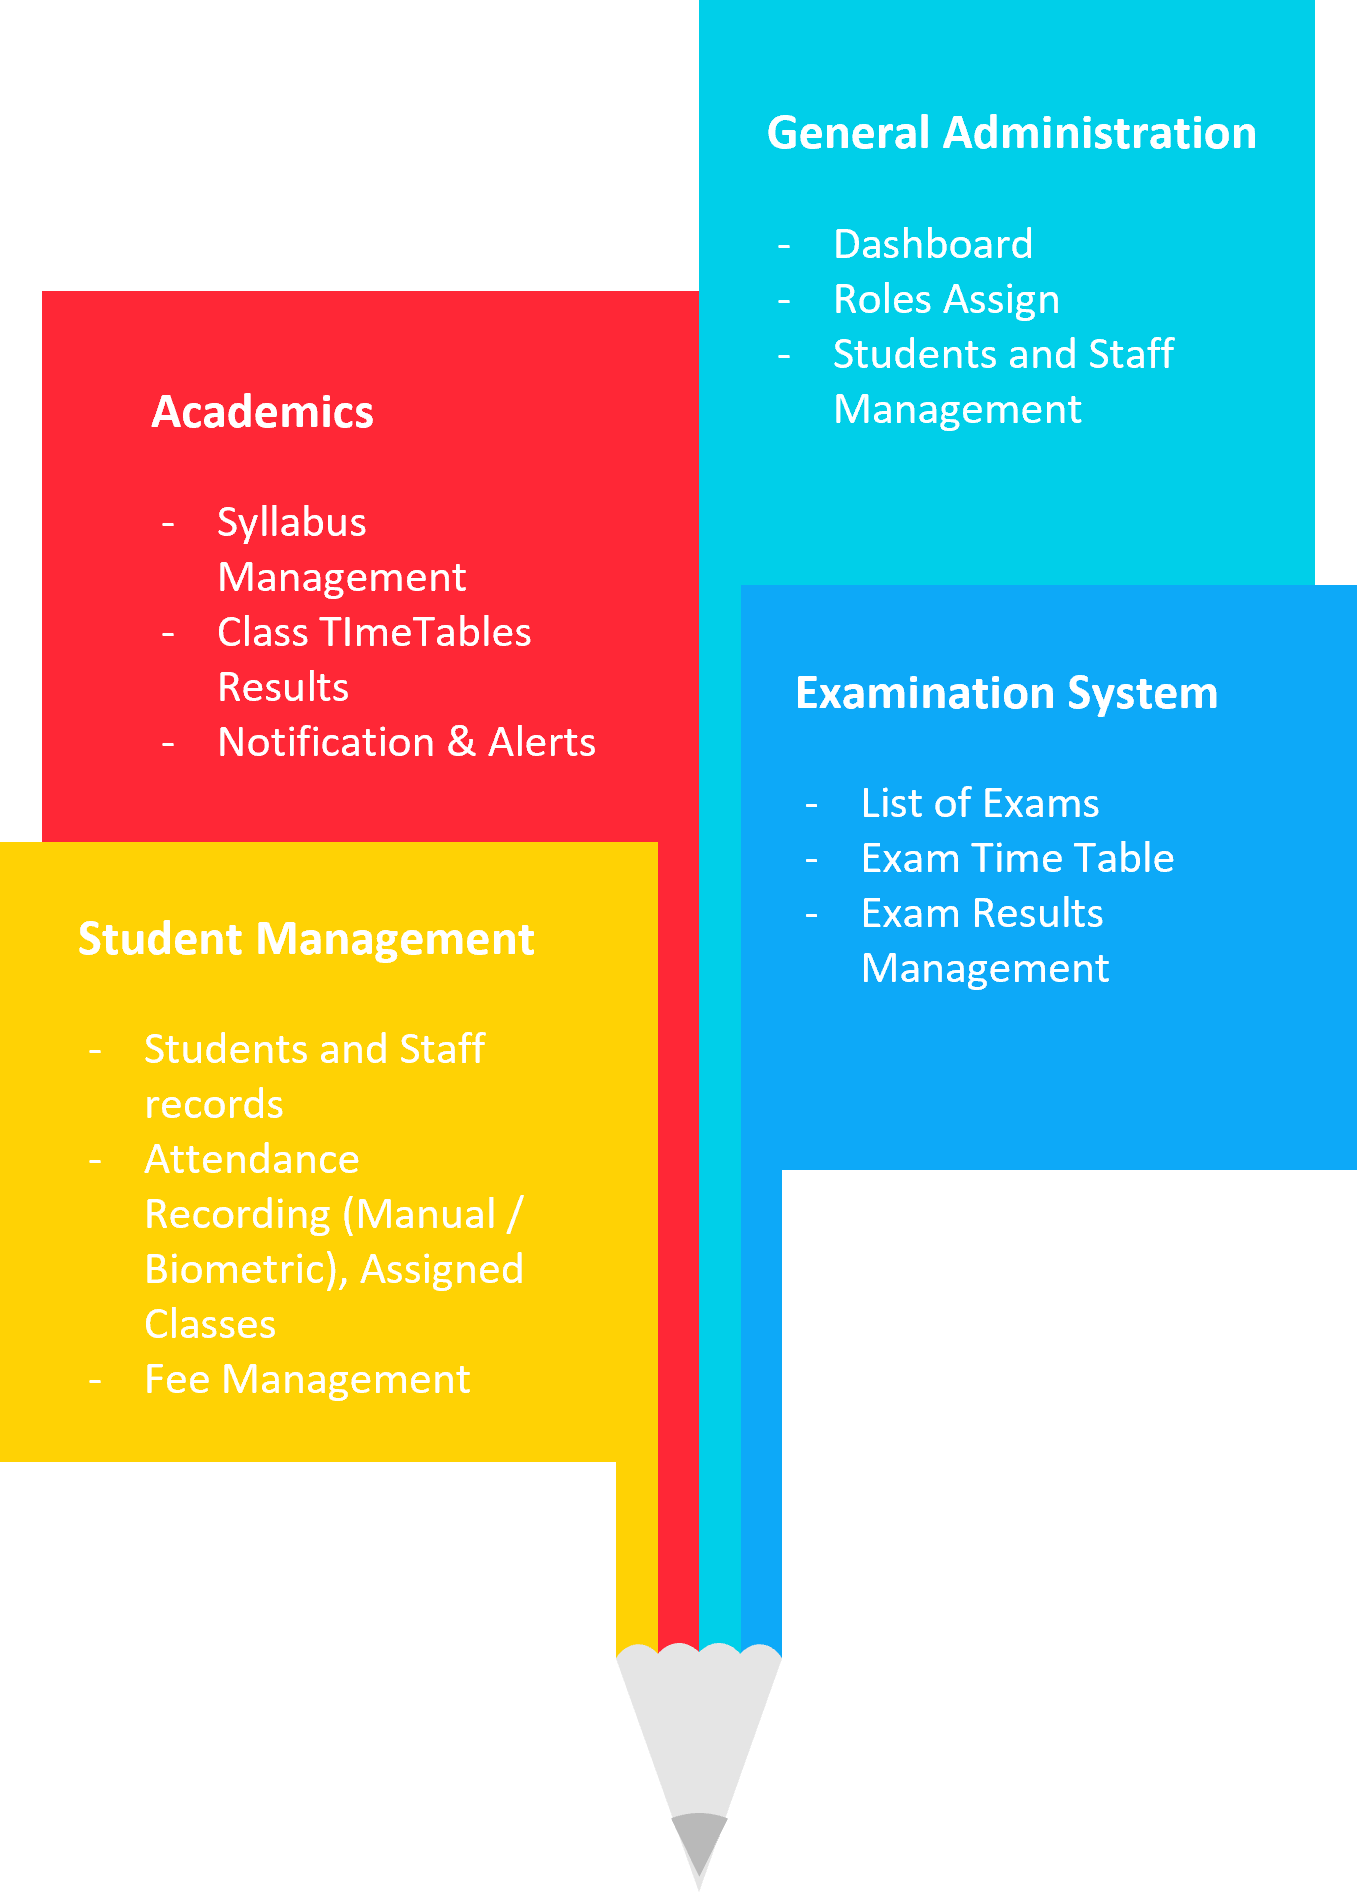 school info